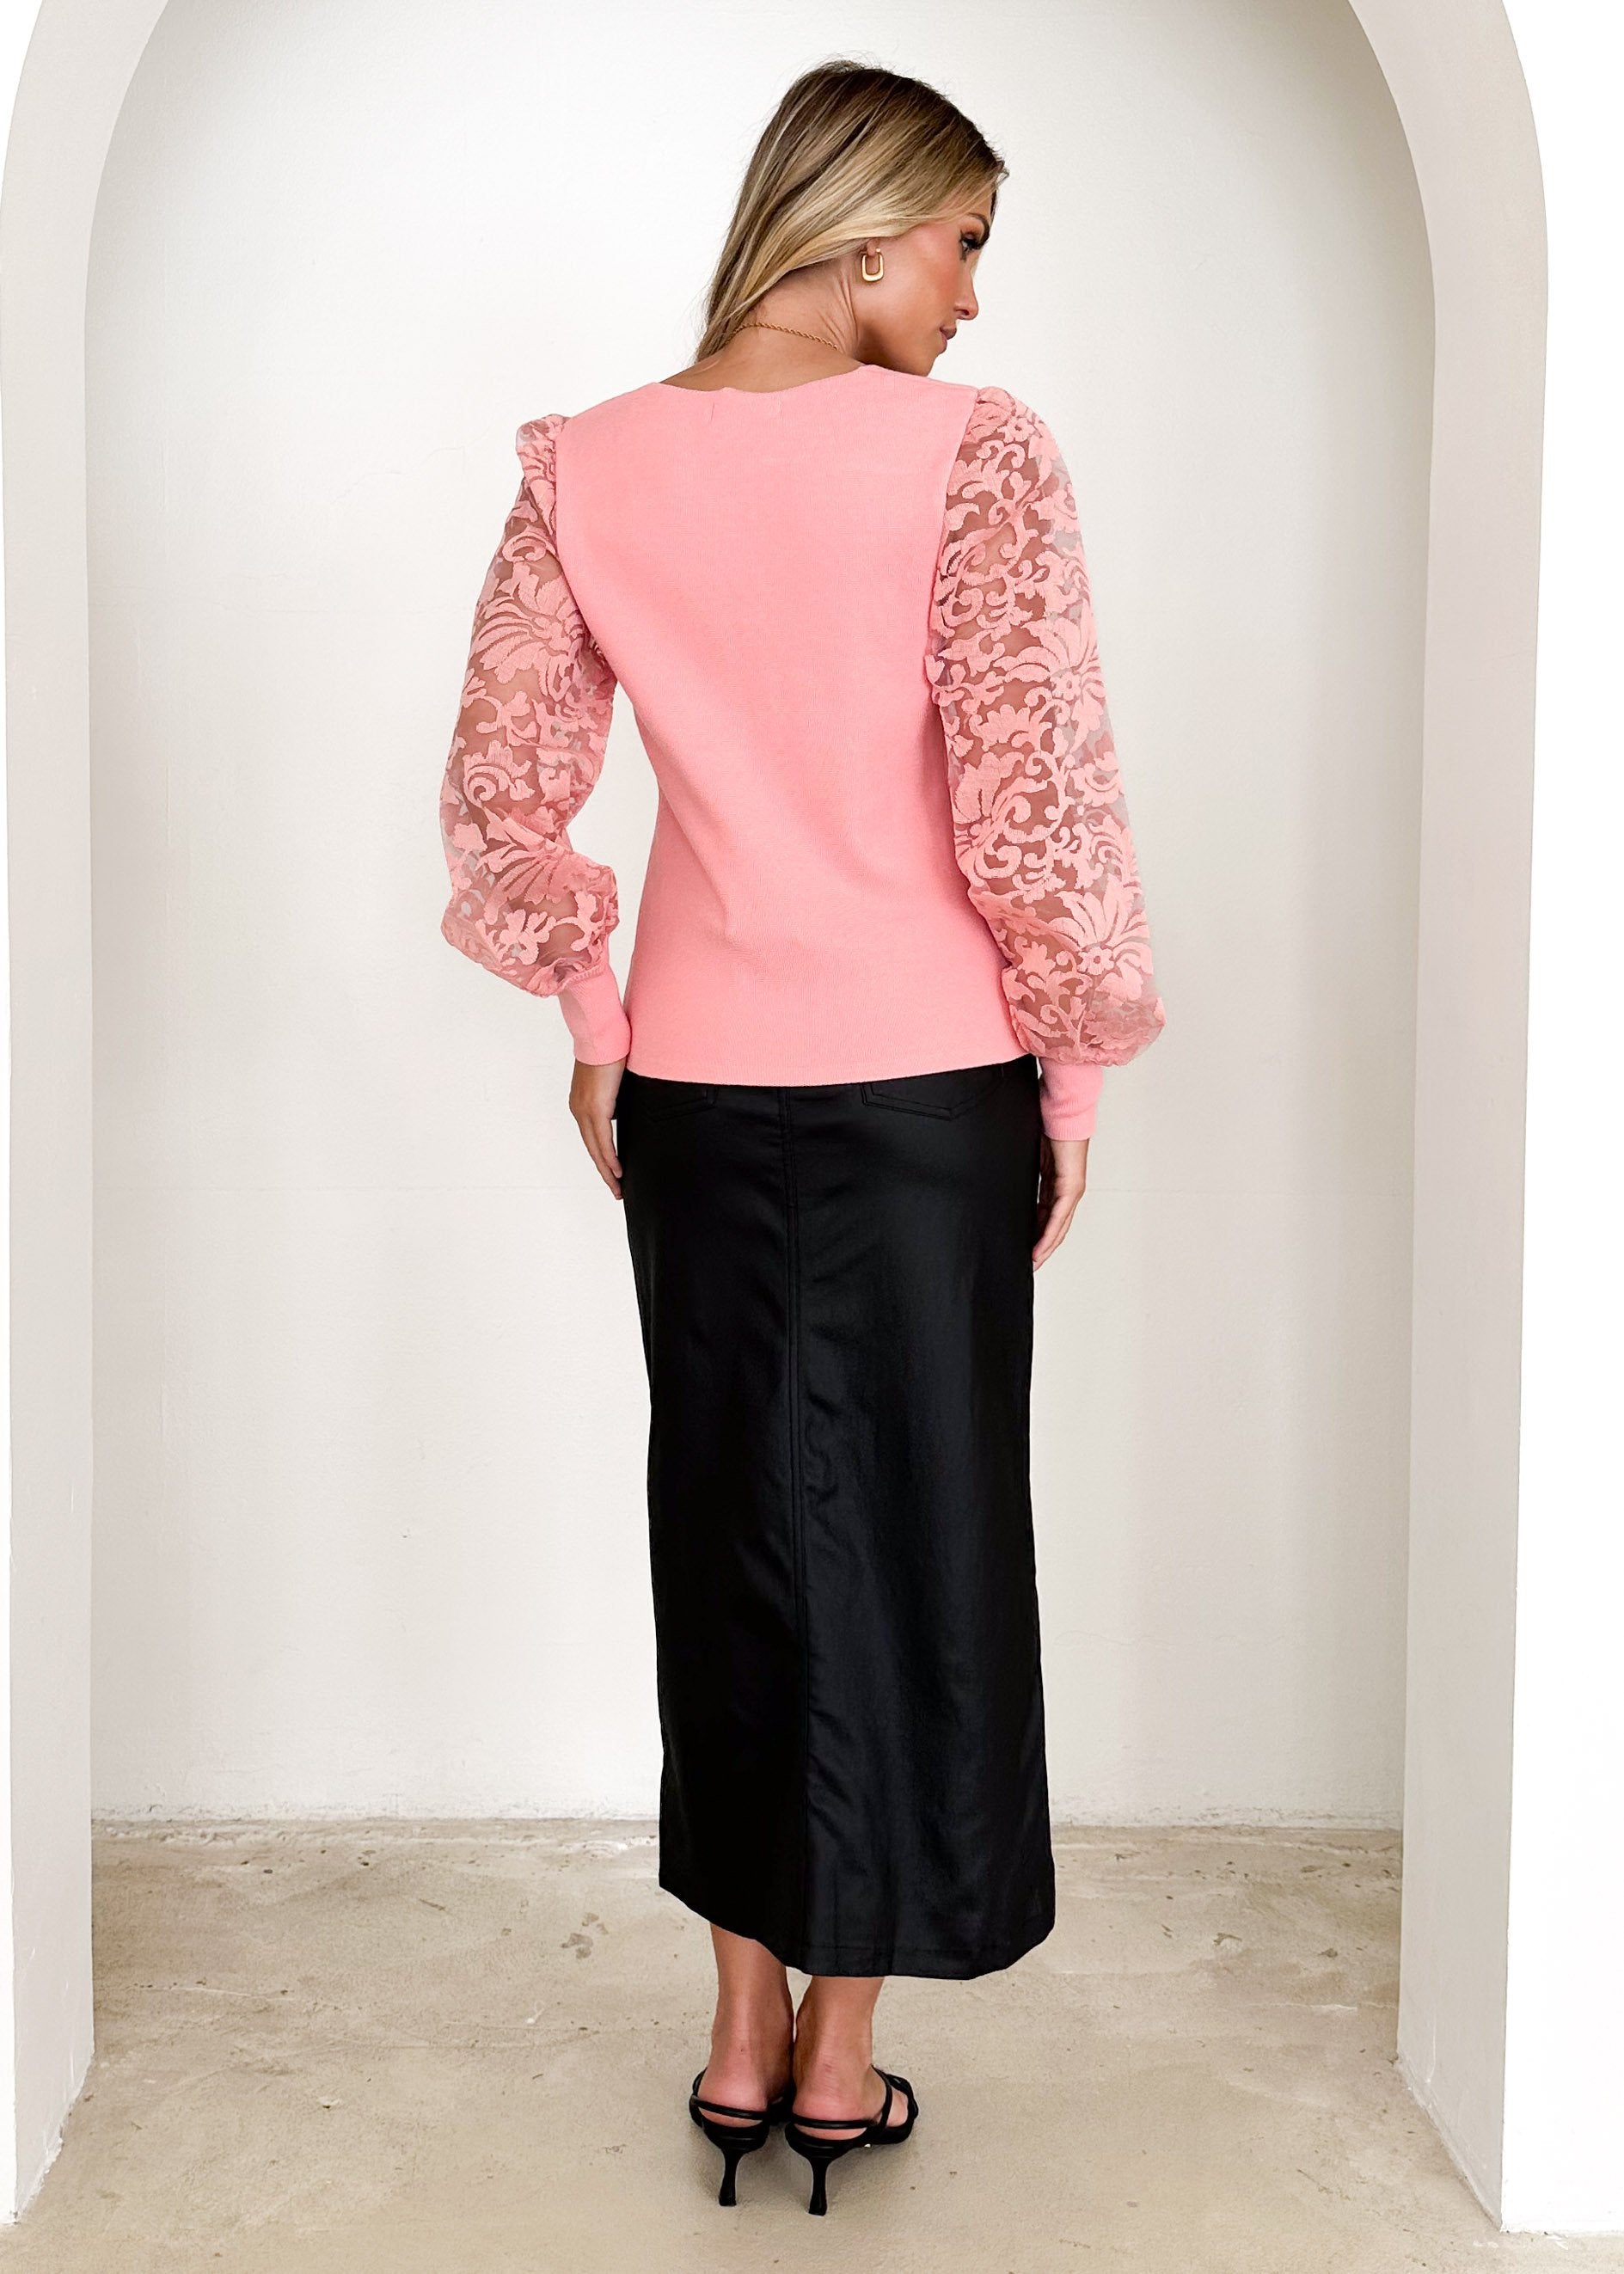 Phasie Knit Top - Pink